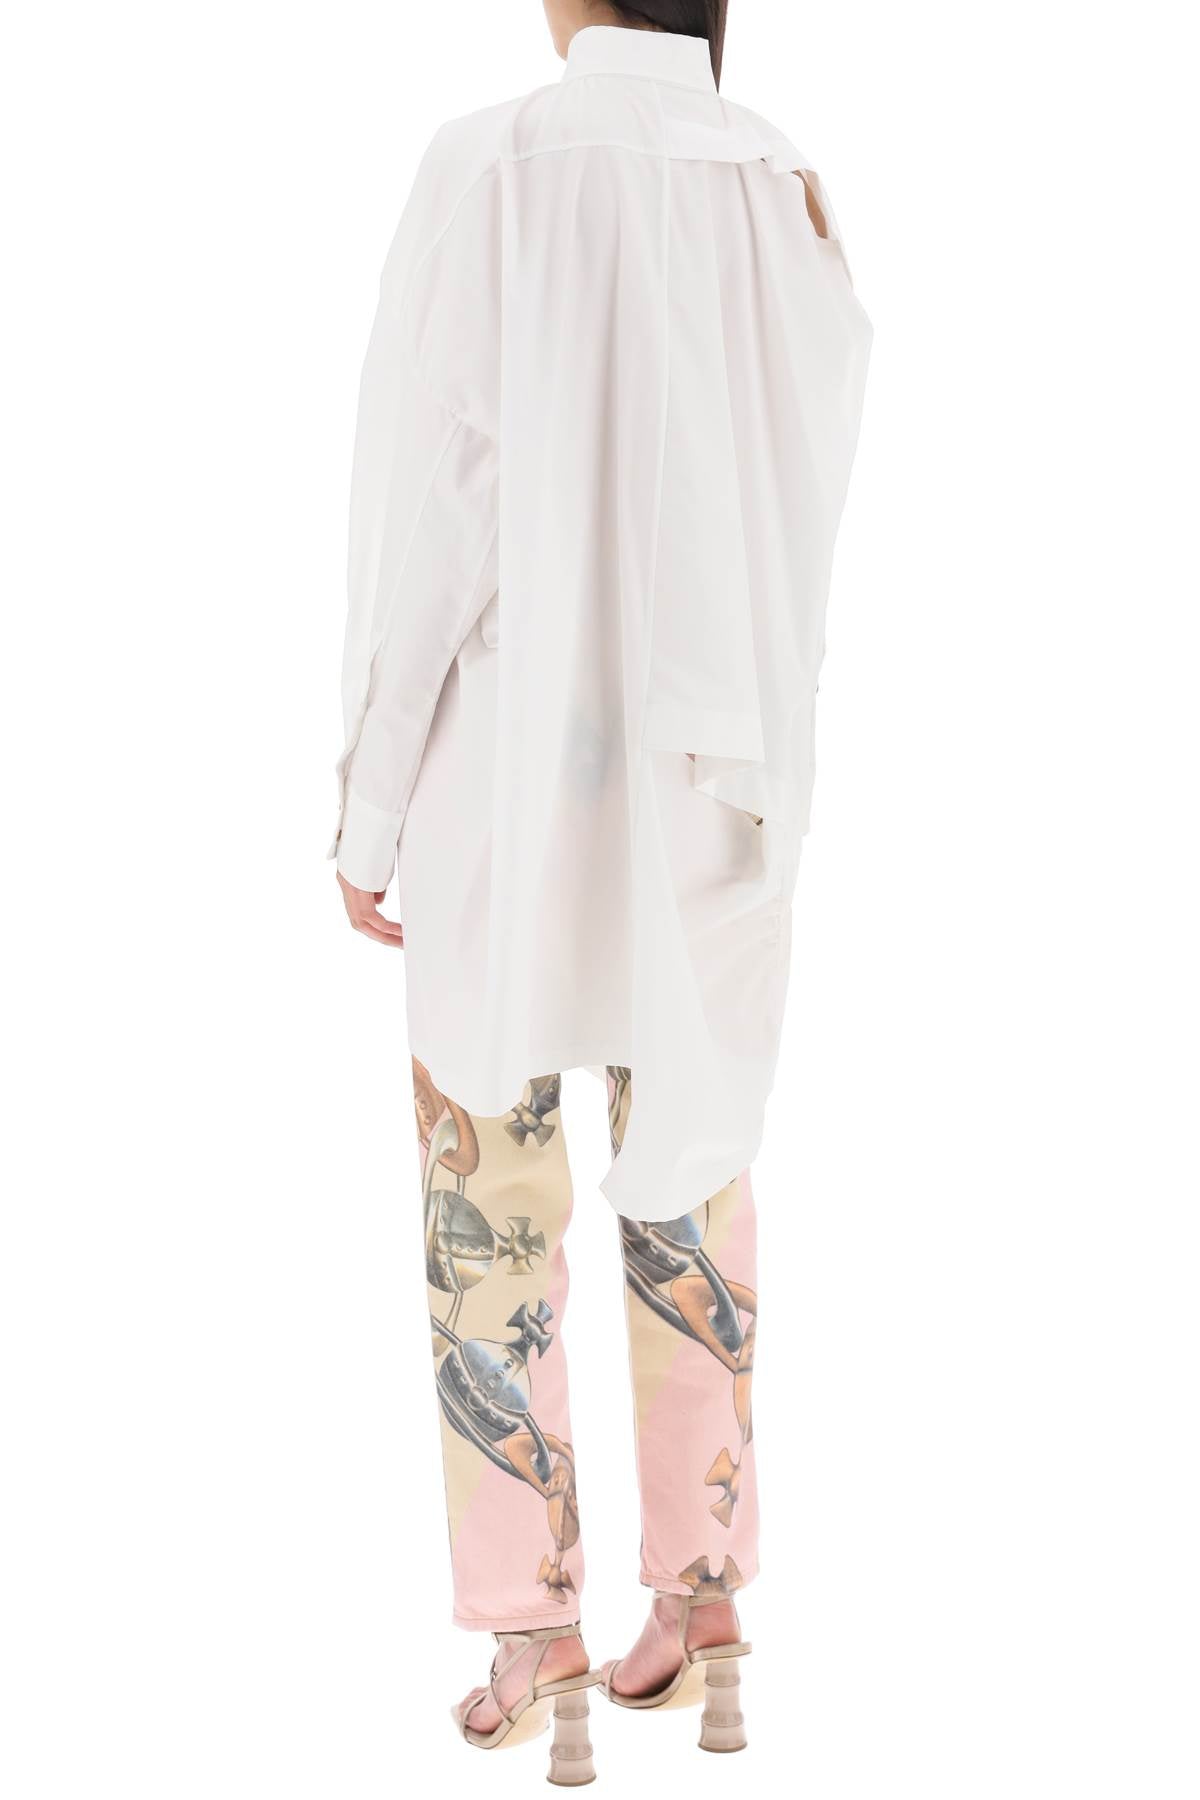 Vivienne westwood gibbon asymmetric shirt dress with cut-outs-2